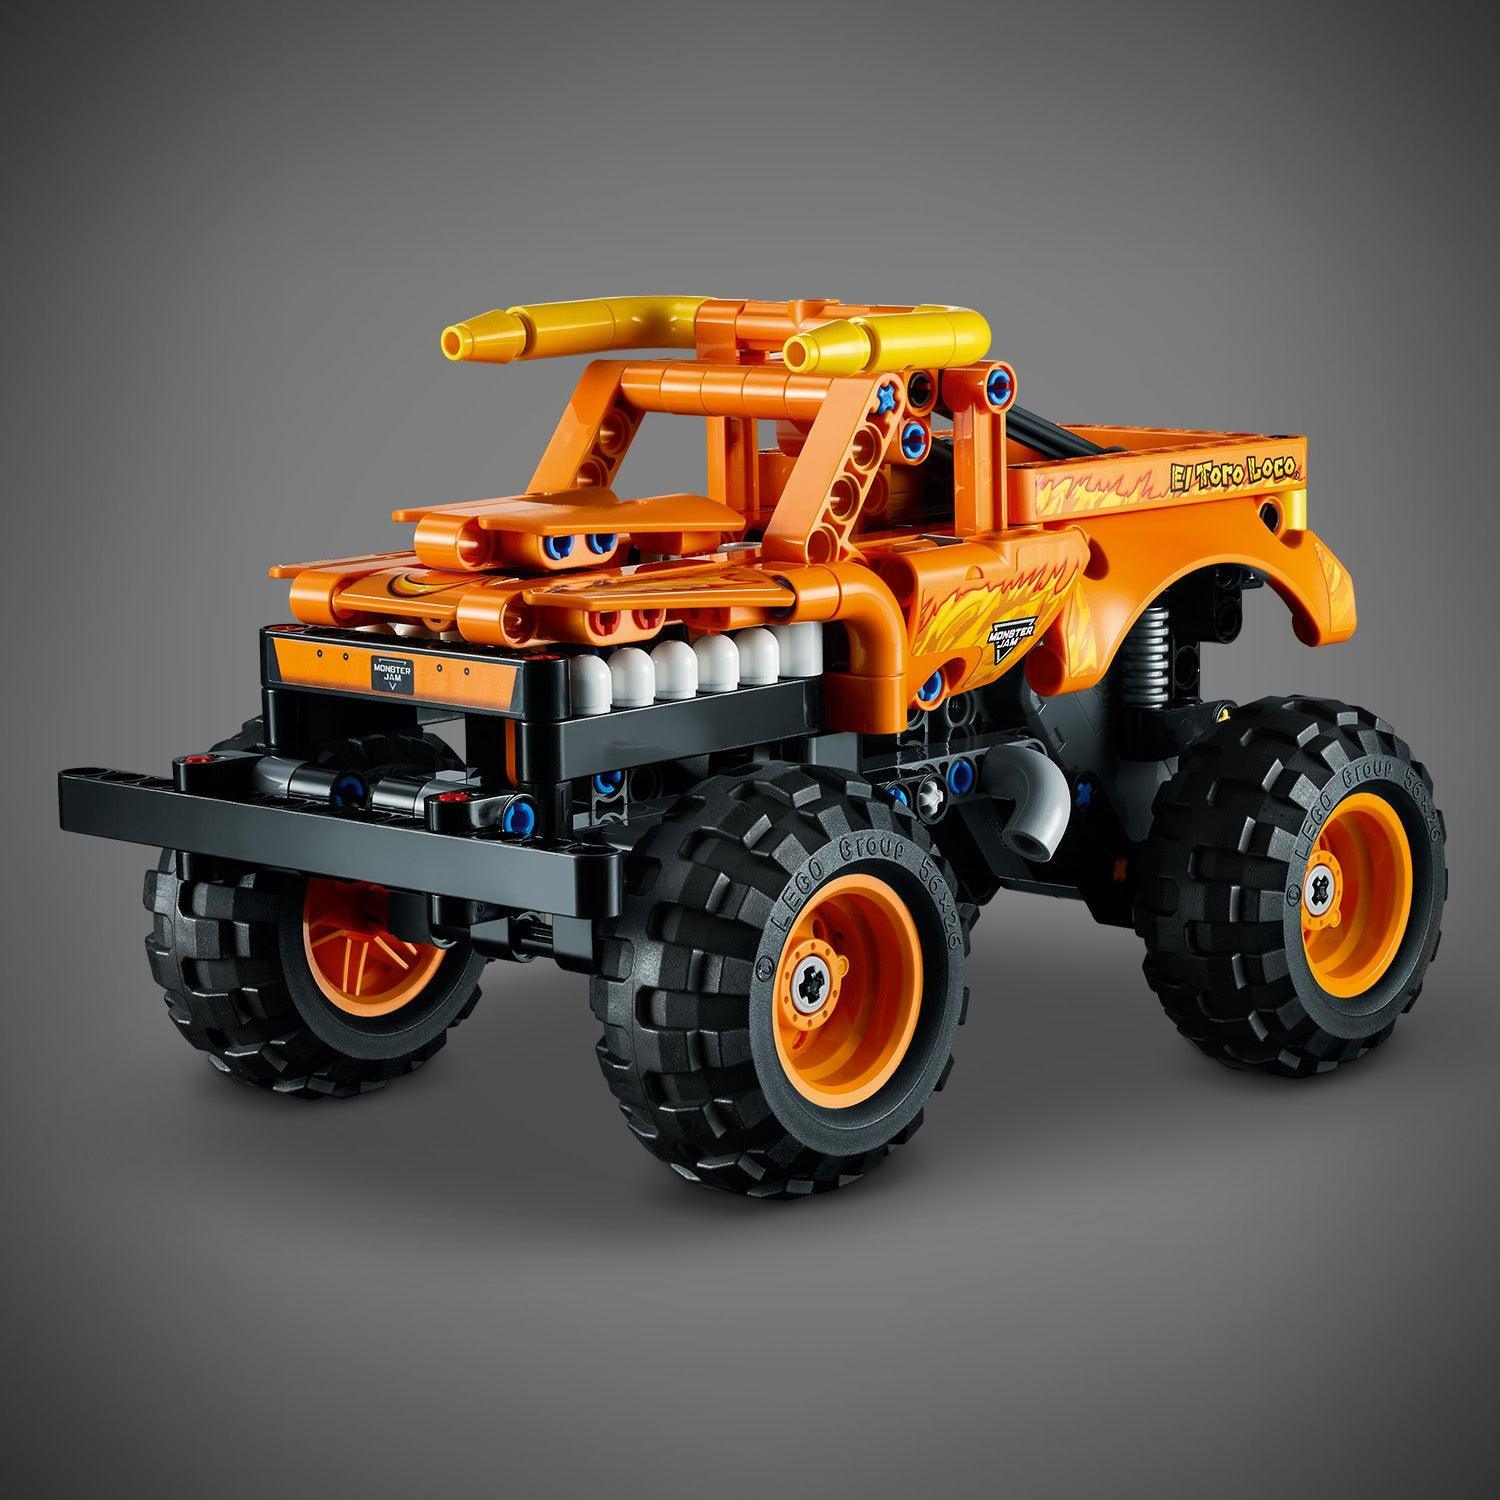 LEGO Monster Jam Truck El Toro Loco 42135 Technic LEGO TECHNIC @ 2TTOYS LEGO €. 19.99